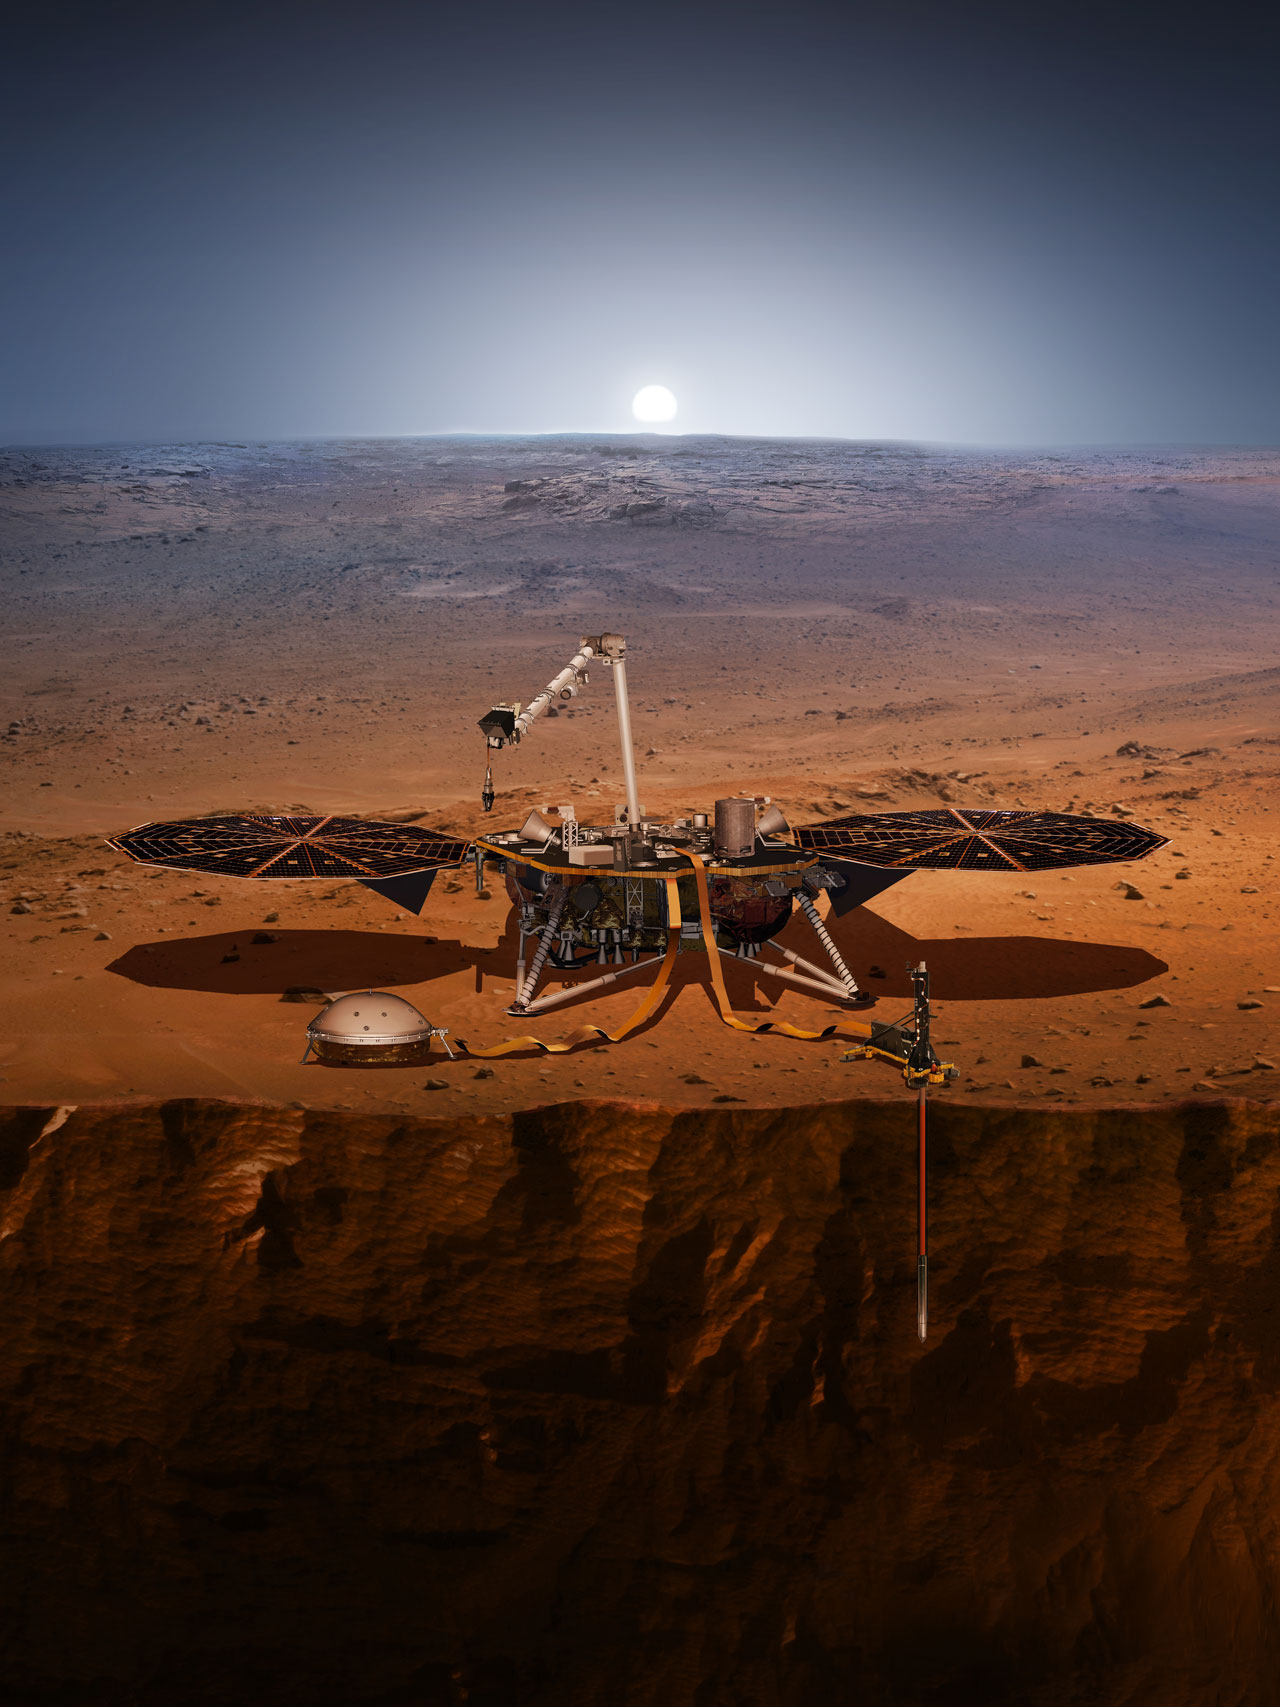 An artist's impression of the InSight lander on Mars.